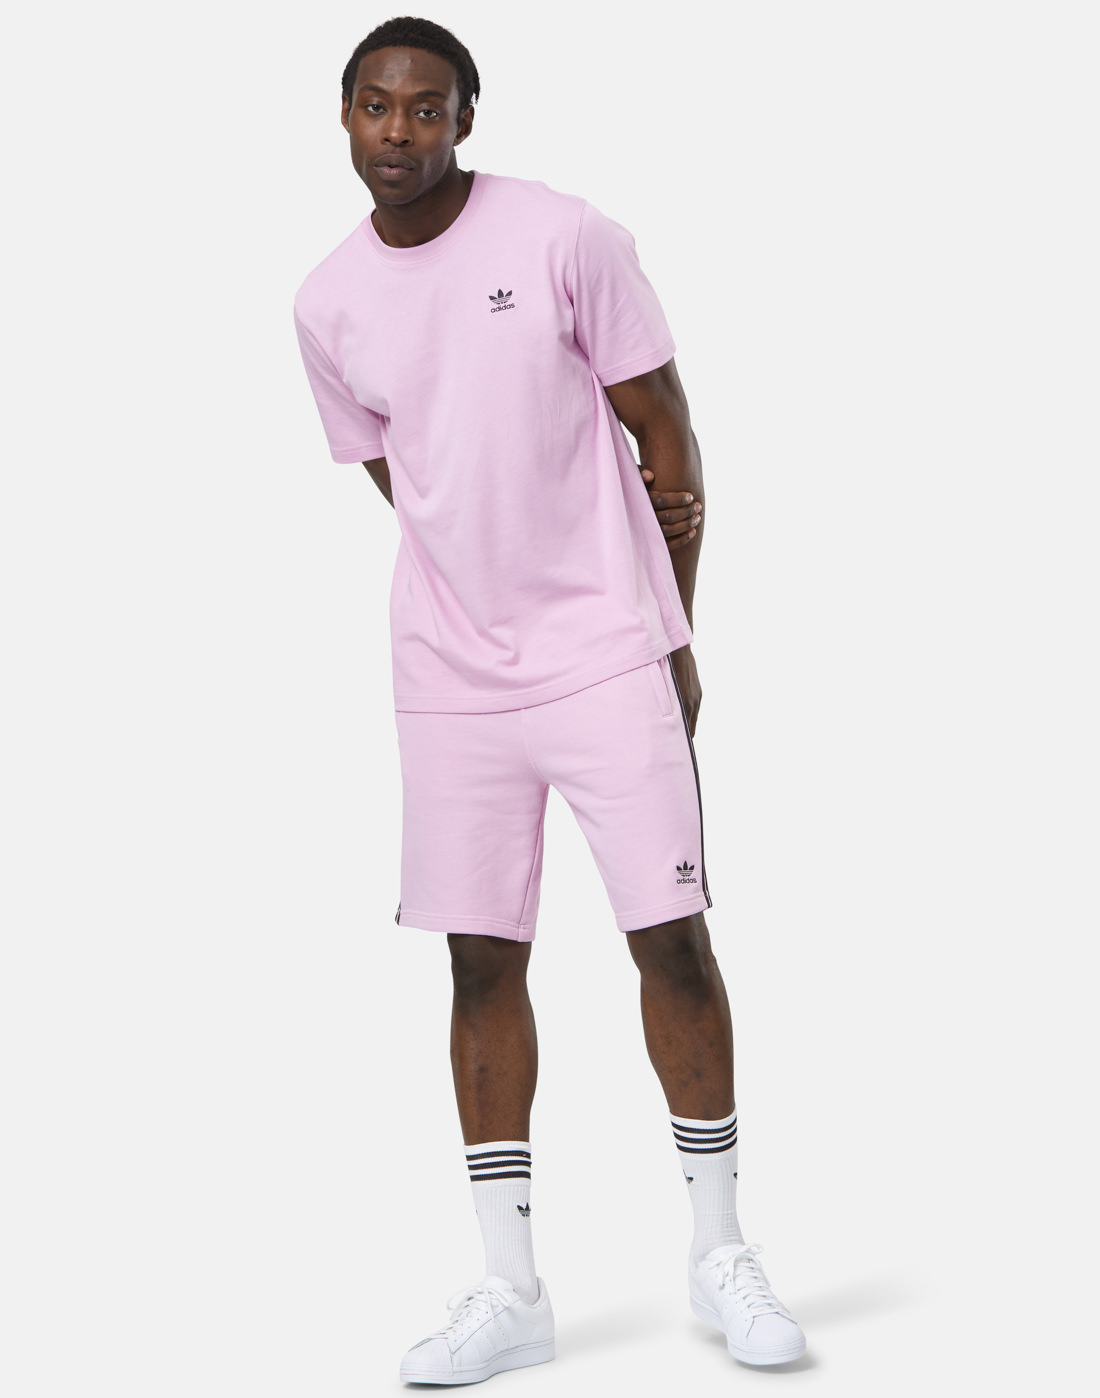 Style Pink Originals Sports adidas | UK Mens Trefoil T-Shirt Life - Print Back